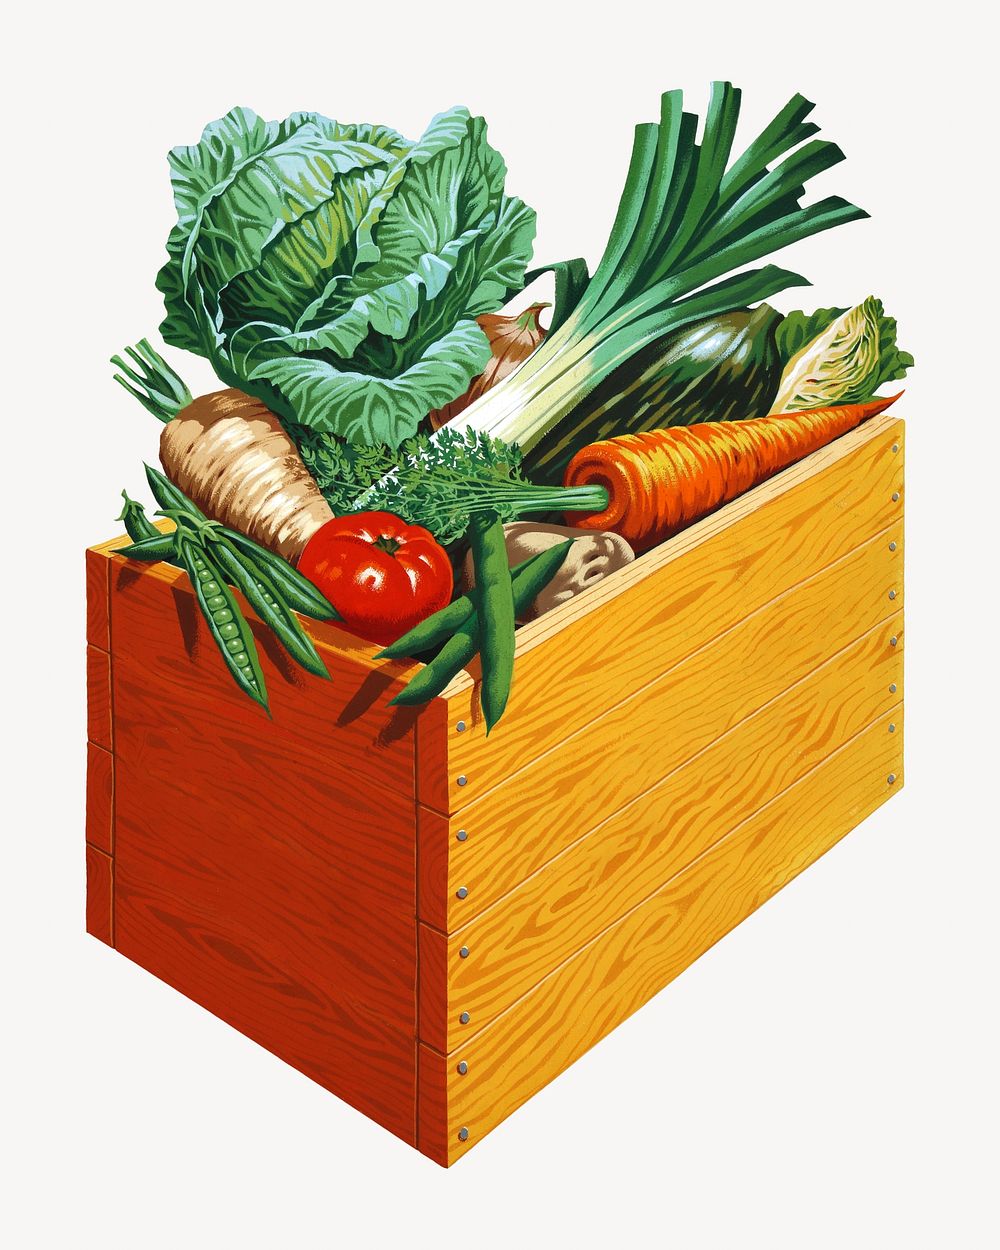 Vintage vegetable box chromolithograph art. Remixed by rawpixel. 